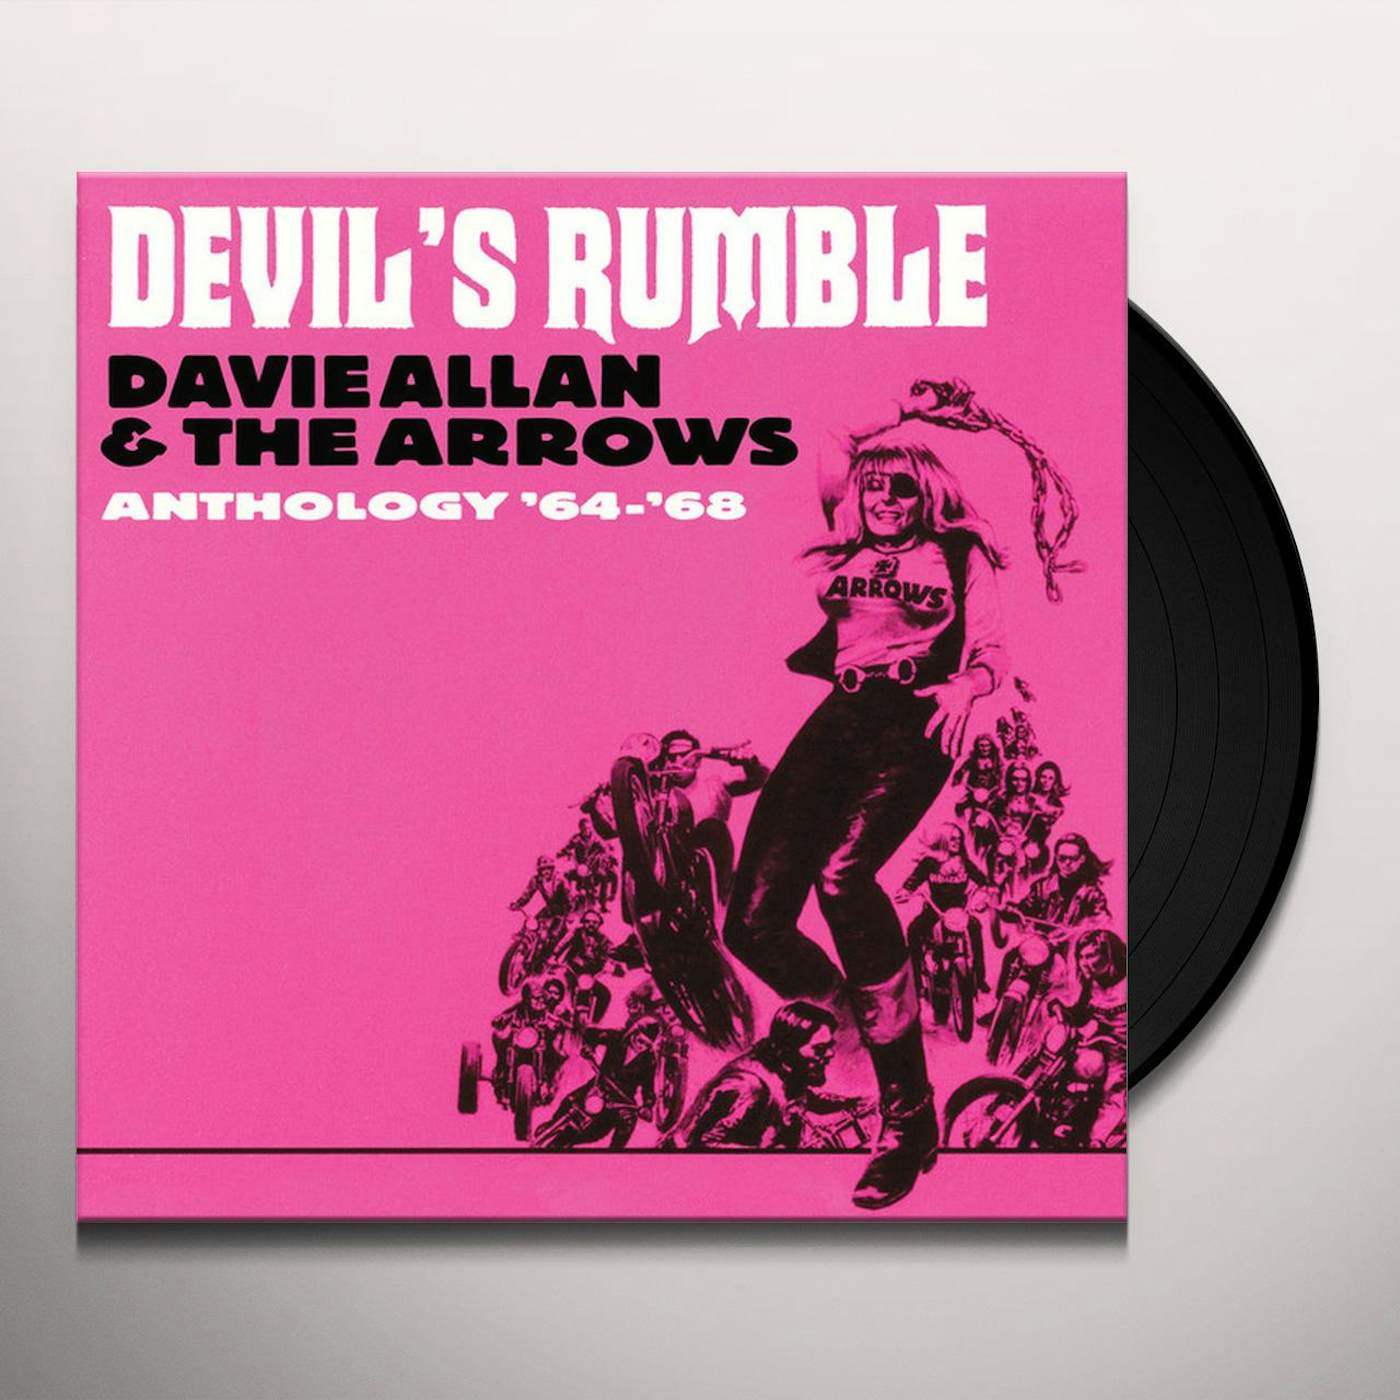 Davie Allan & The Arrows DEVIL'S RUNBLE: ANTHOLOGY 64-68 Vinyl Record